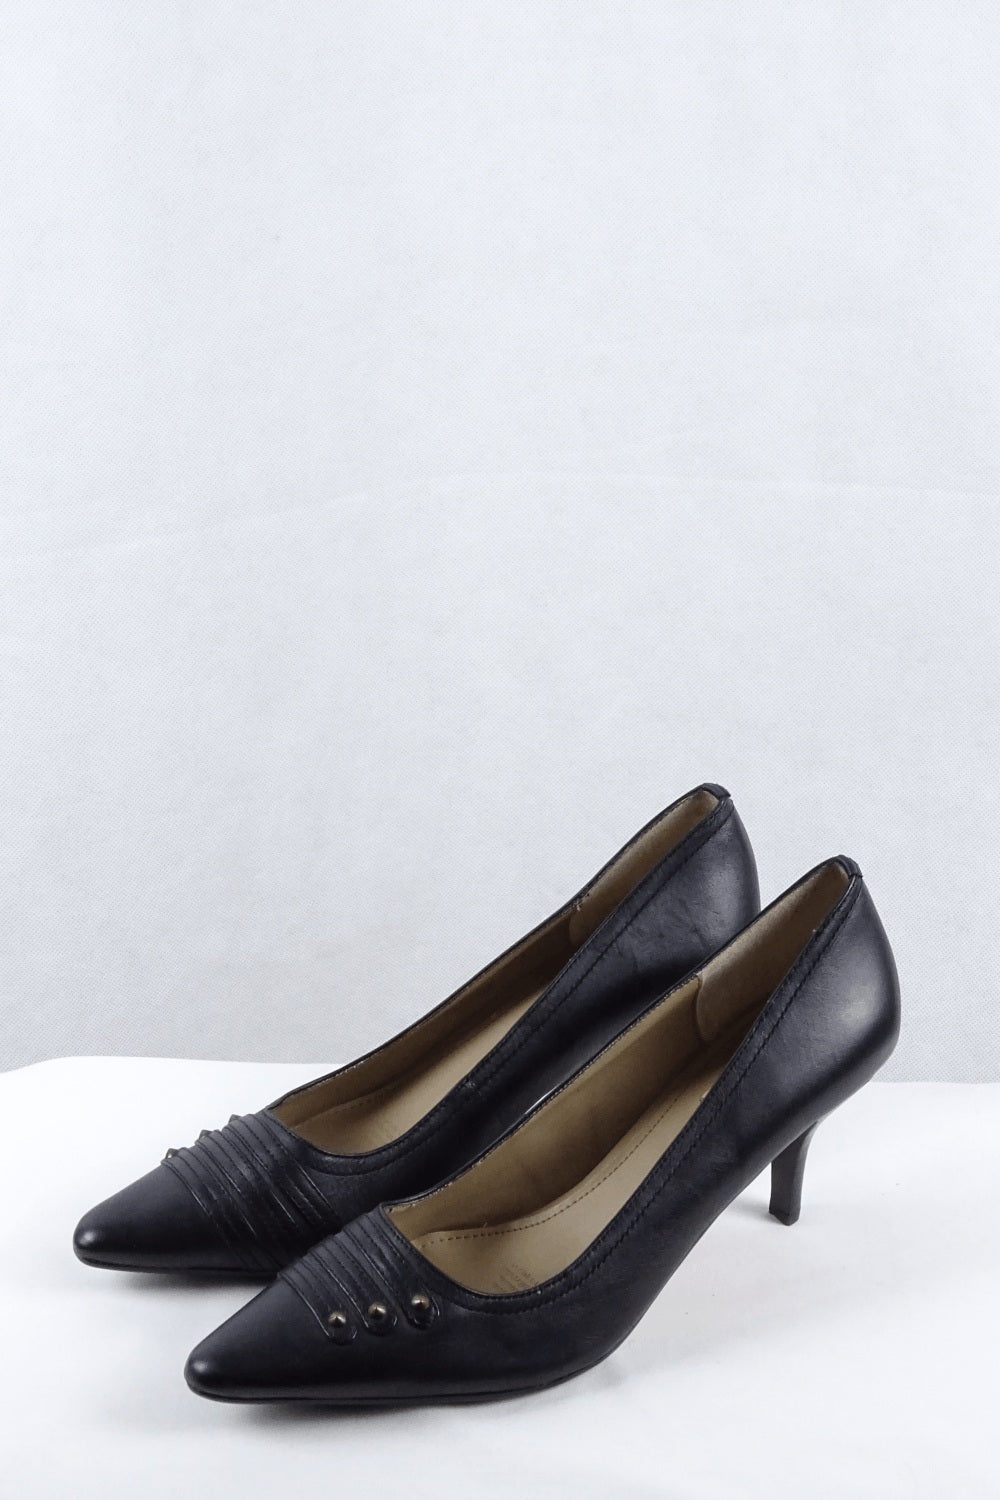 Diana Ferrari Black Stilettos 10